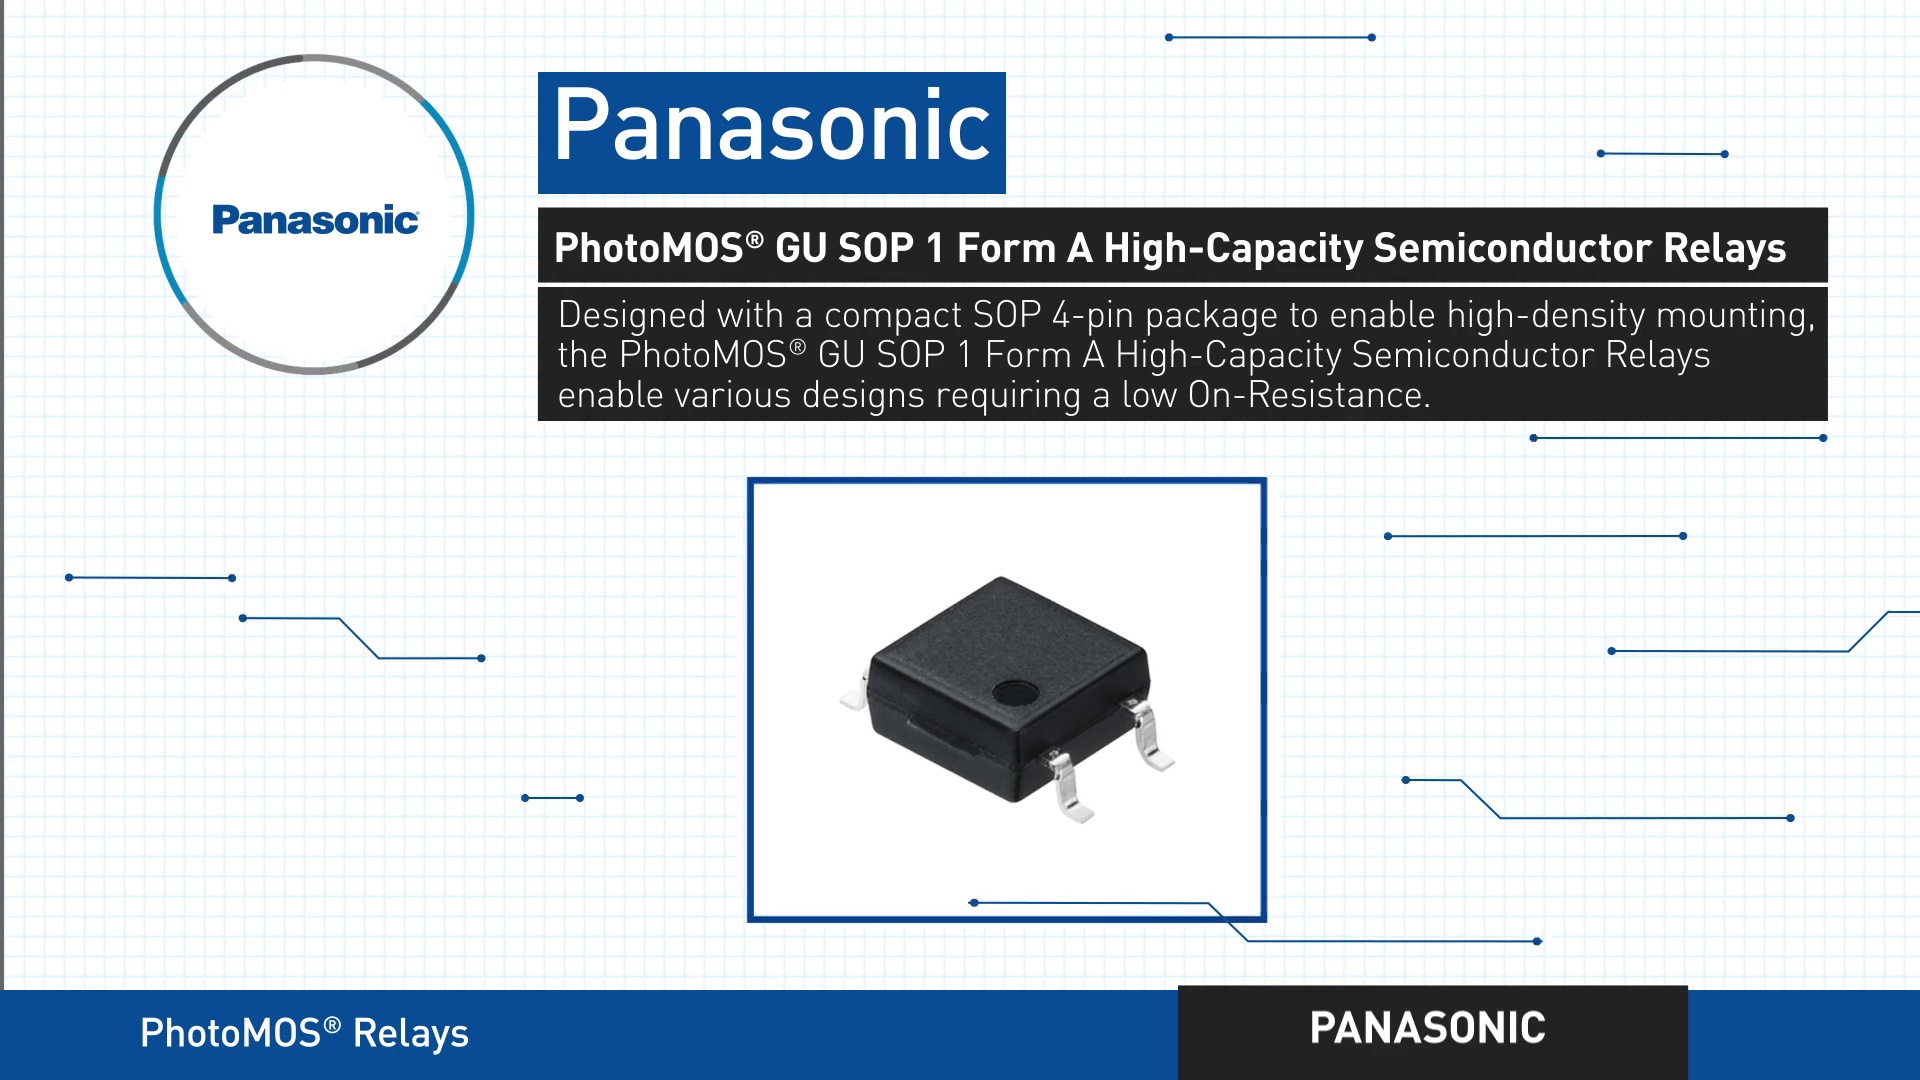 PhotoMOS® GU SOP 1 Form A High-Capacity Semiconductor Relays